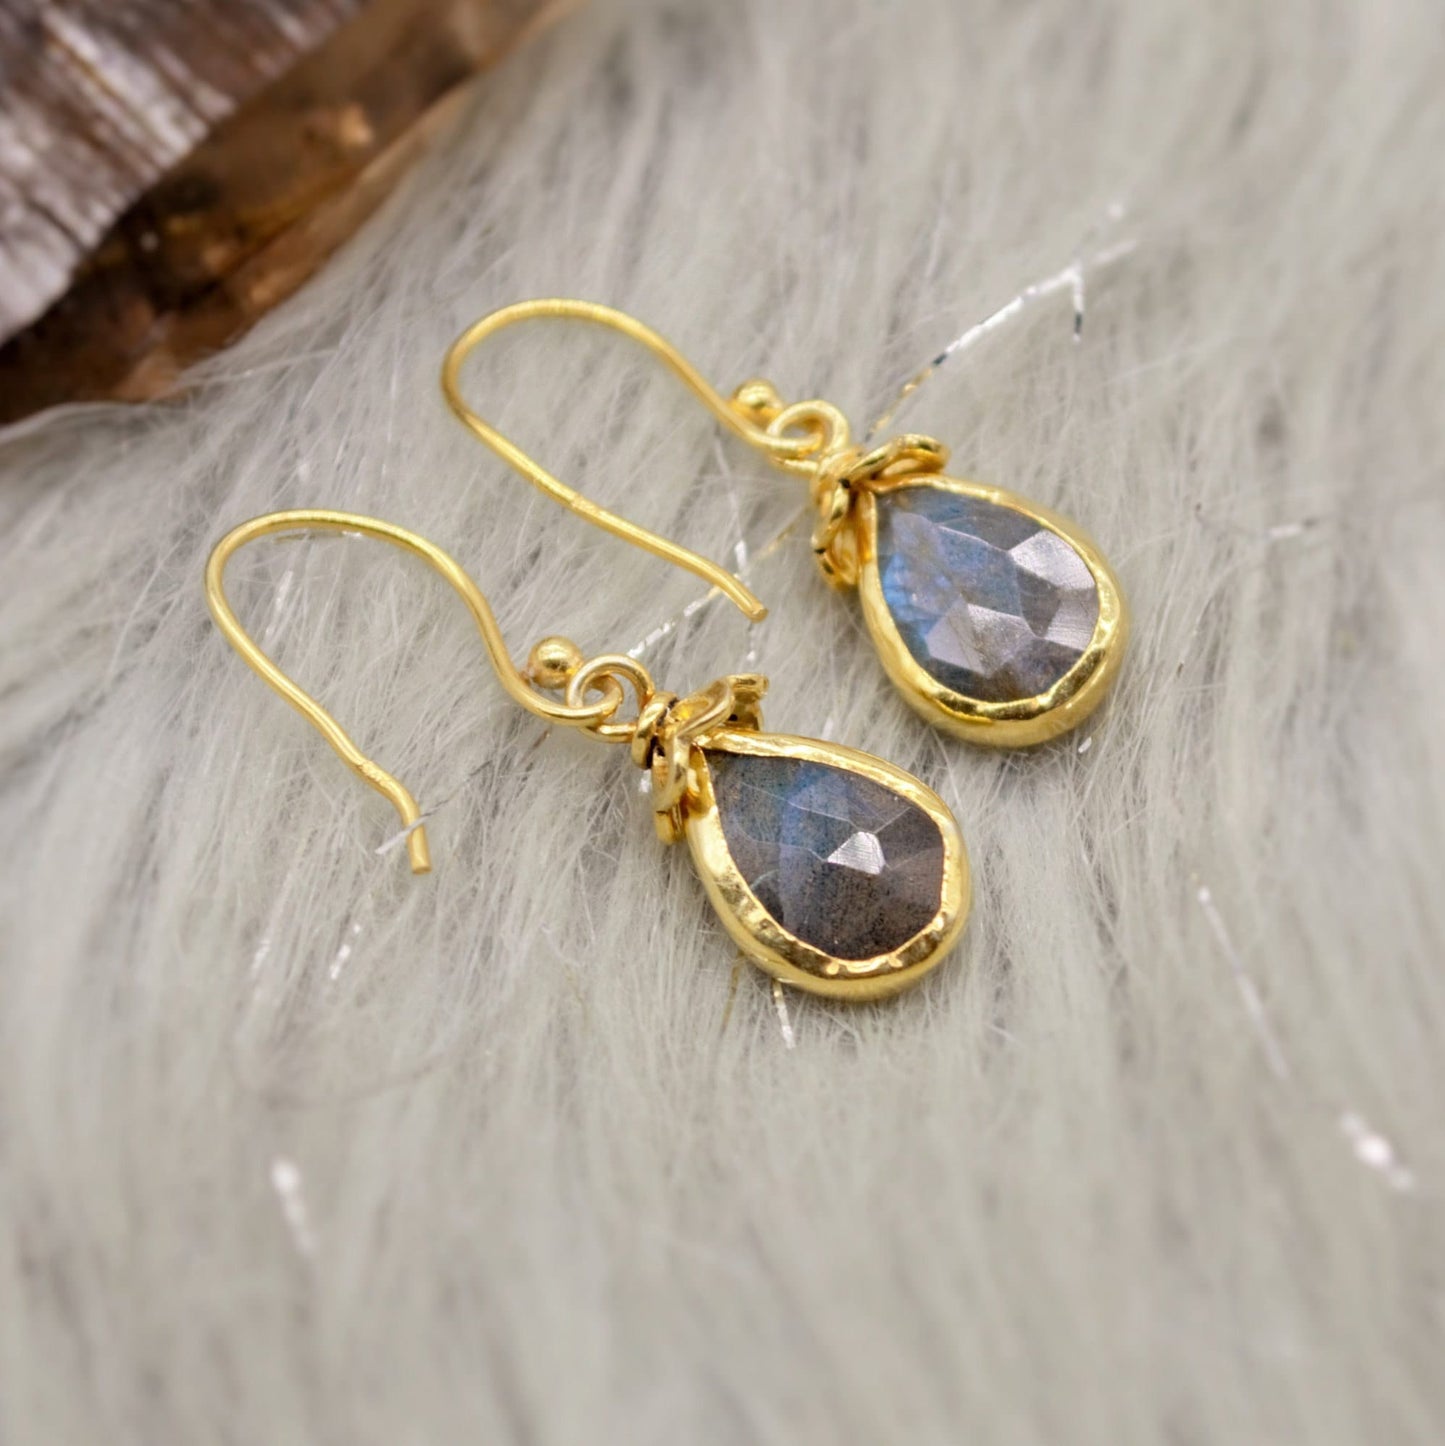 Labradorite Dangle Silver Earrings, Gold Plated Sterling Silver, Handmade Gemstone Earrings, Labradorite Stone Jewelry, Gift For Her